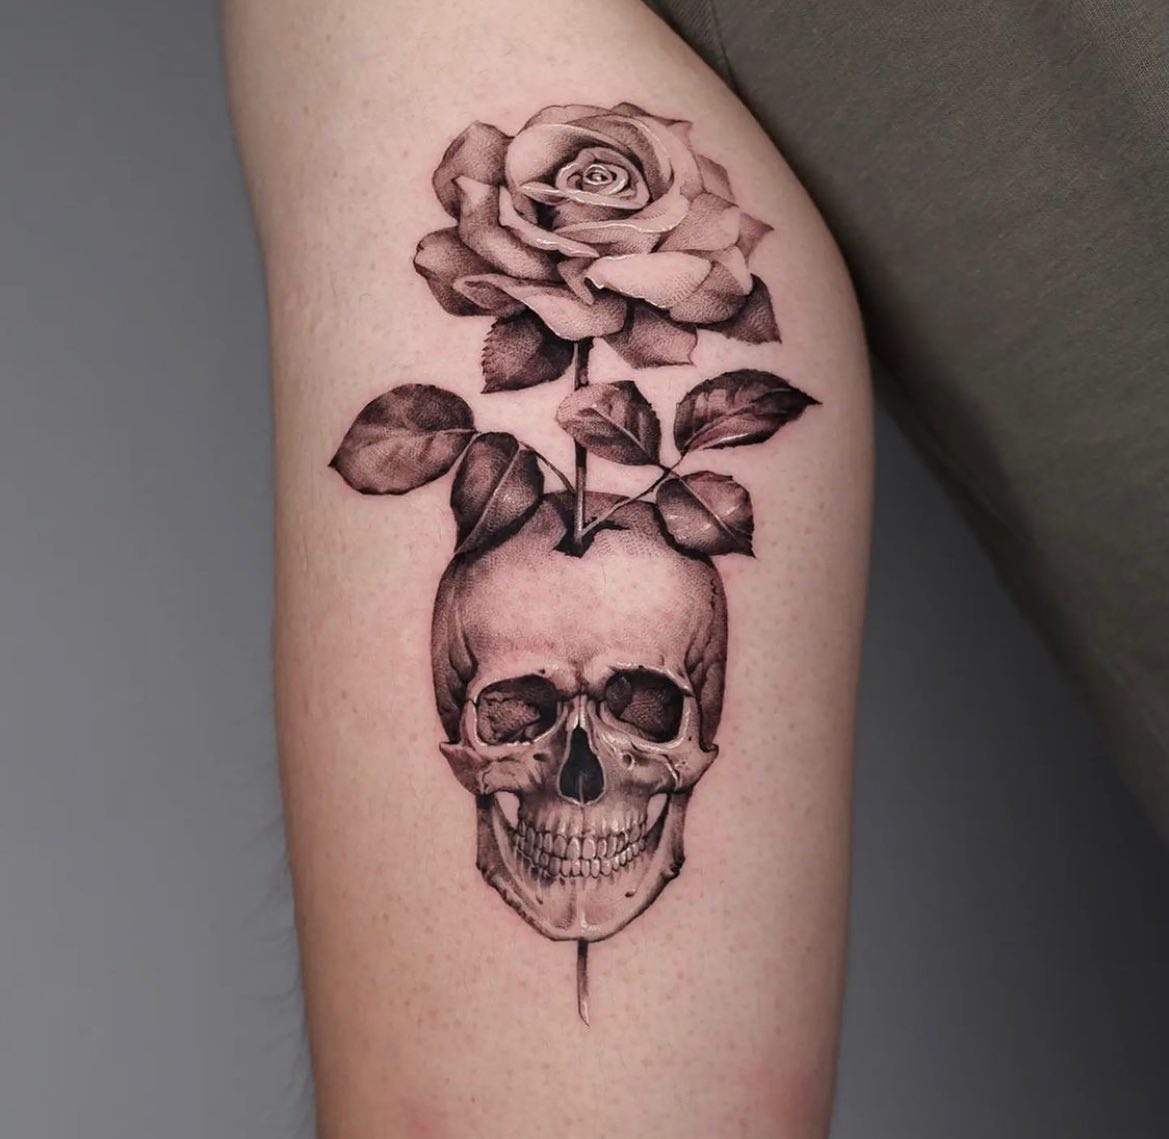 Tatuaż czaszki i róży